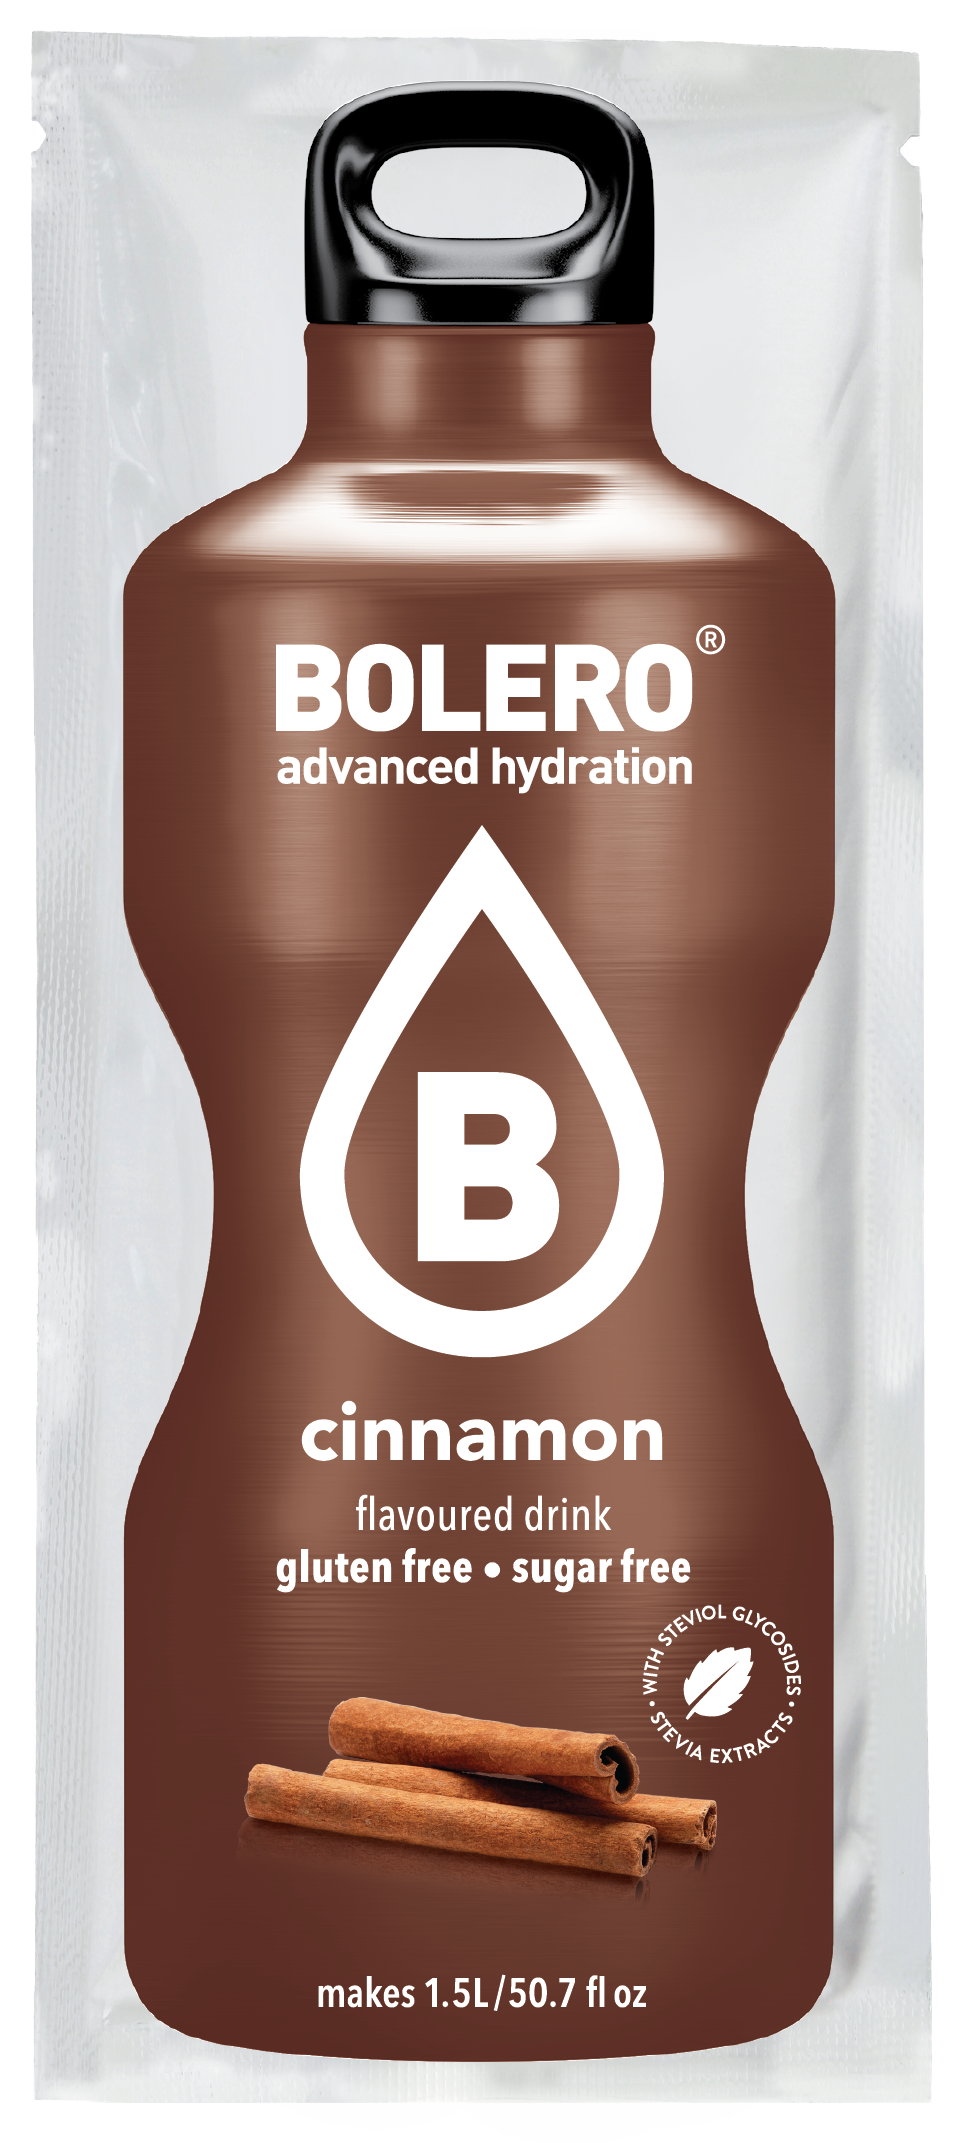 Bolero Advanced Hydration - Cinnamon (Box of 12 Sachets) SALE PRODUCT - Exp 11-2-23